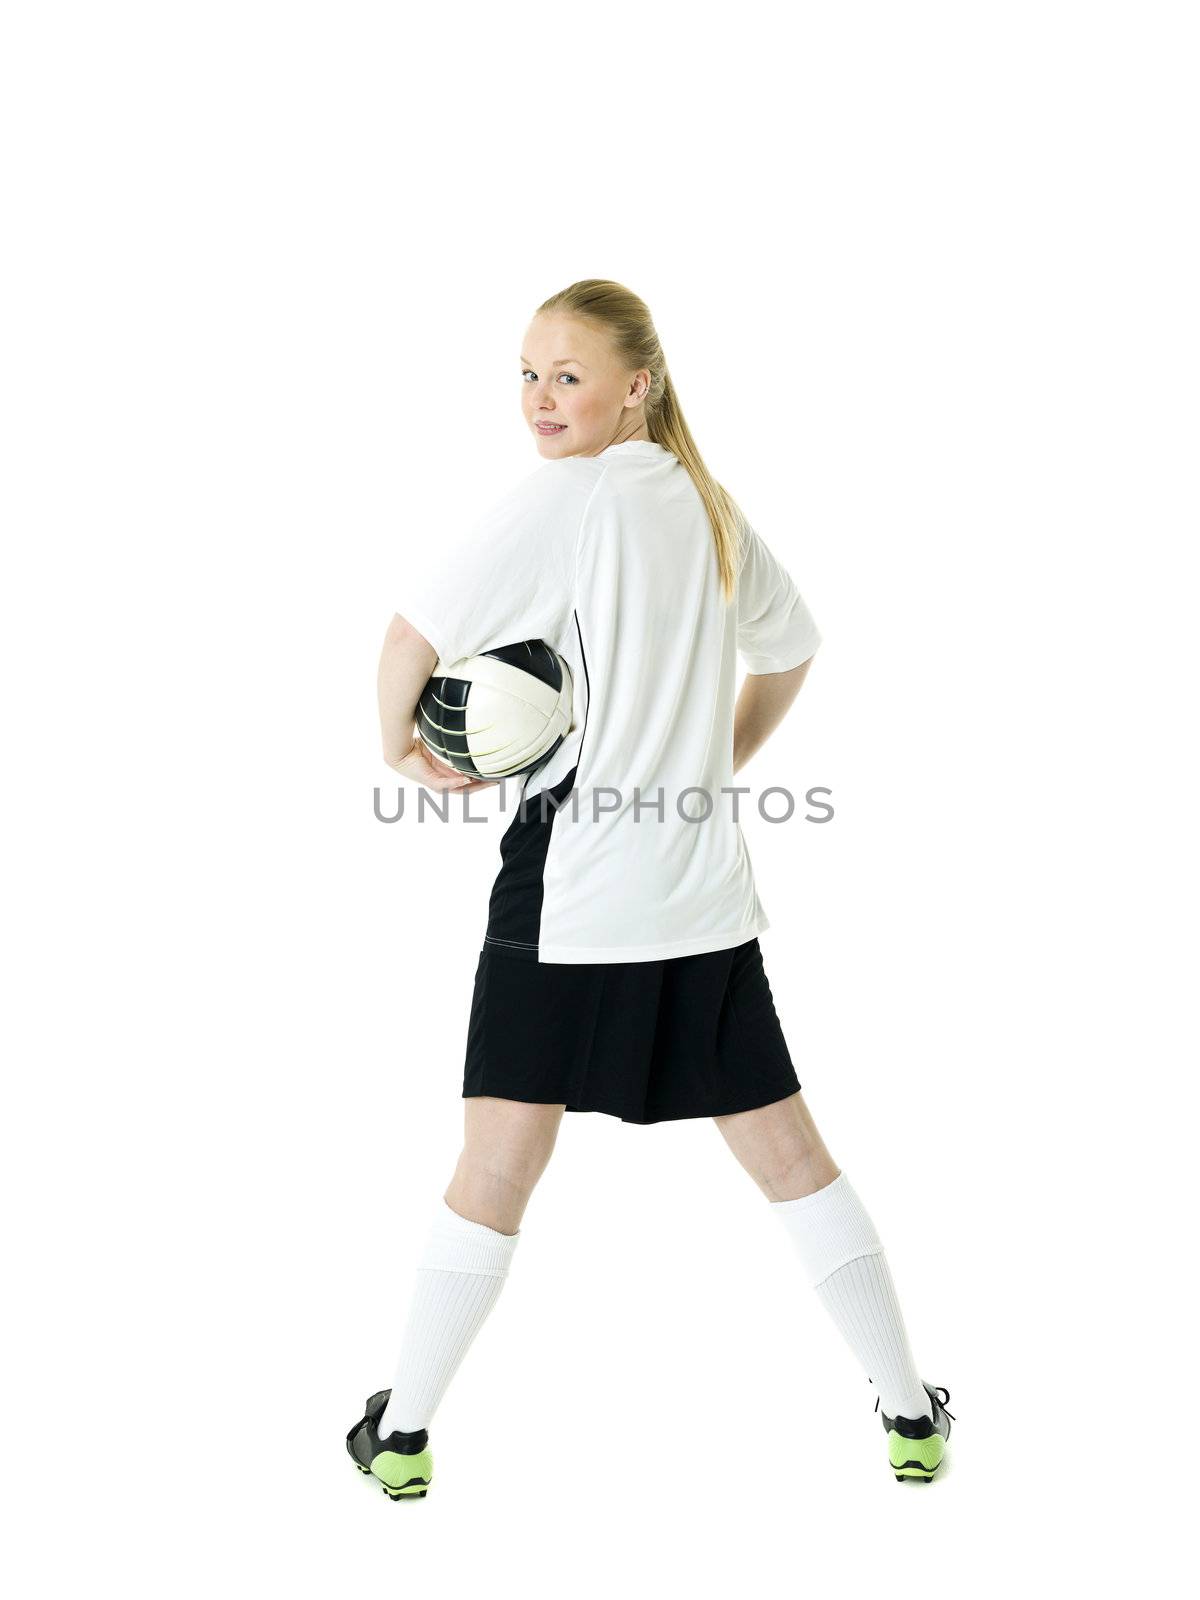 Soccer woman by gemenacom